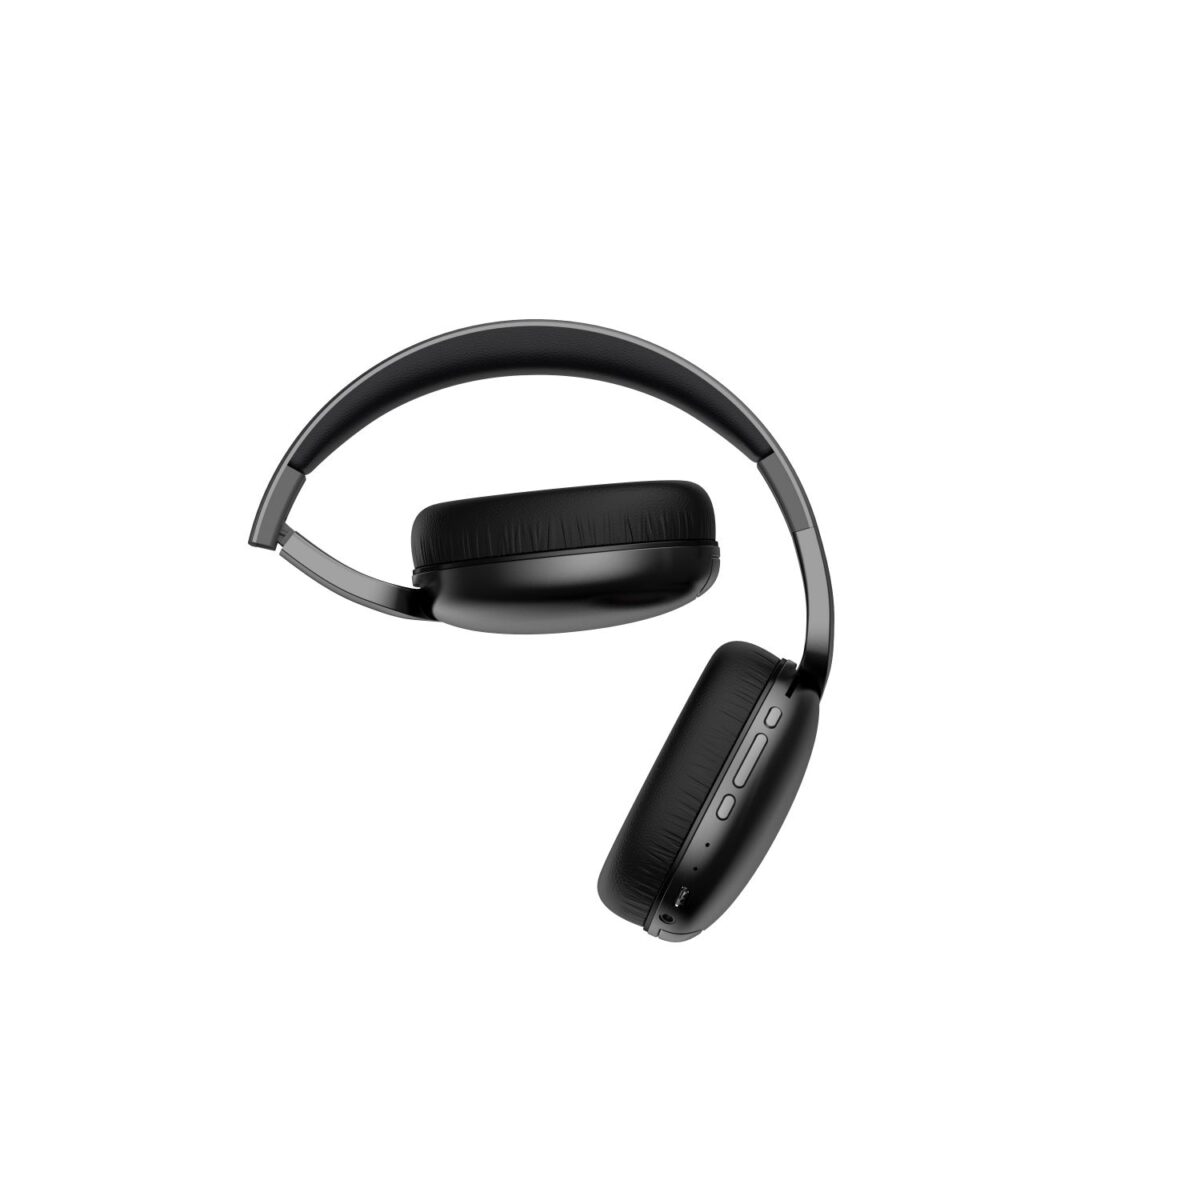 Review: Burtone Fold Wireless Headphones